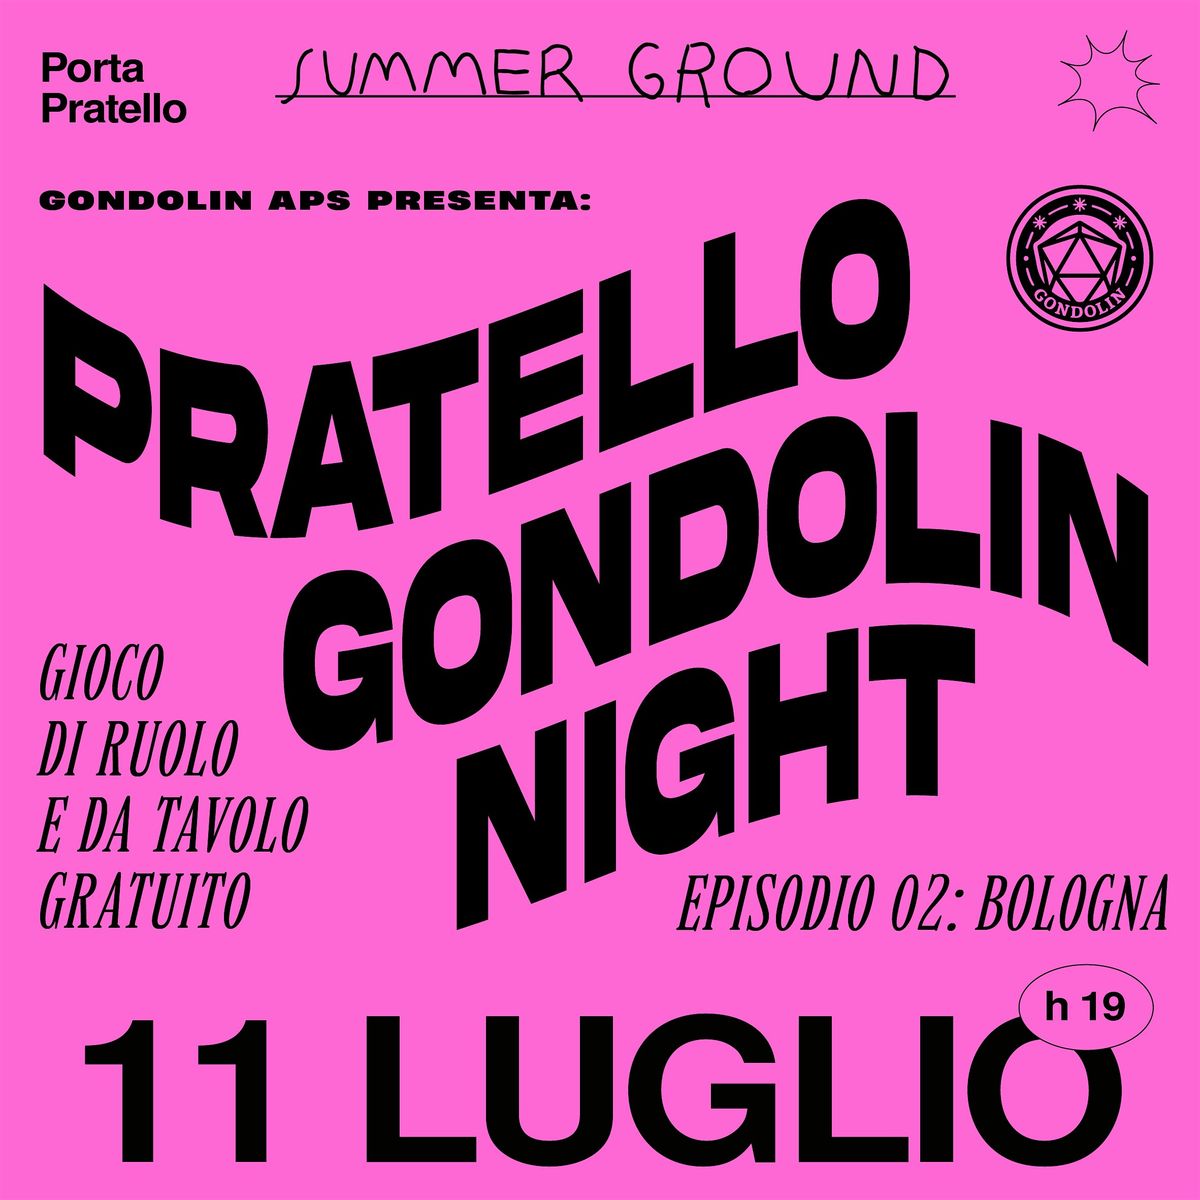 Pratello Gondolin Night, Ep. 02: Bologna